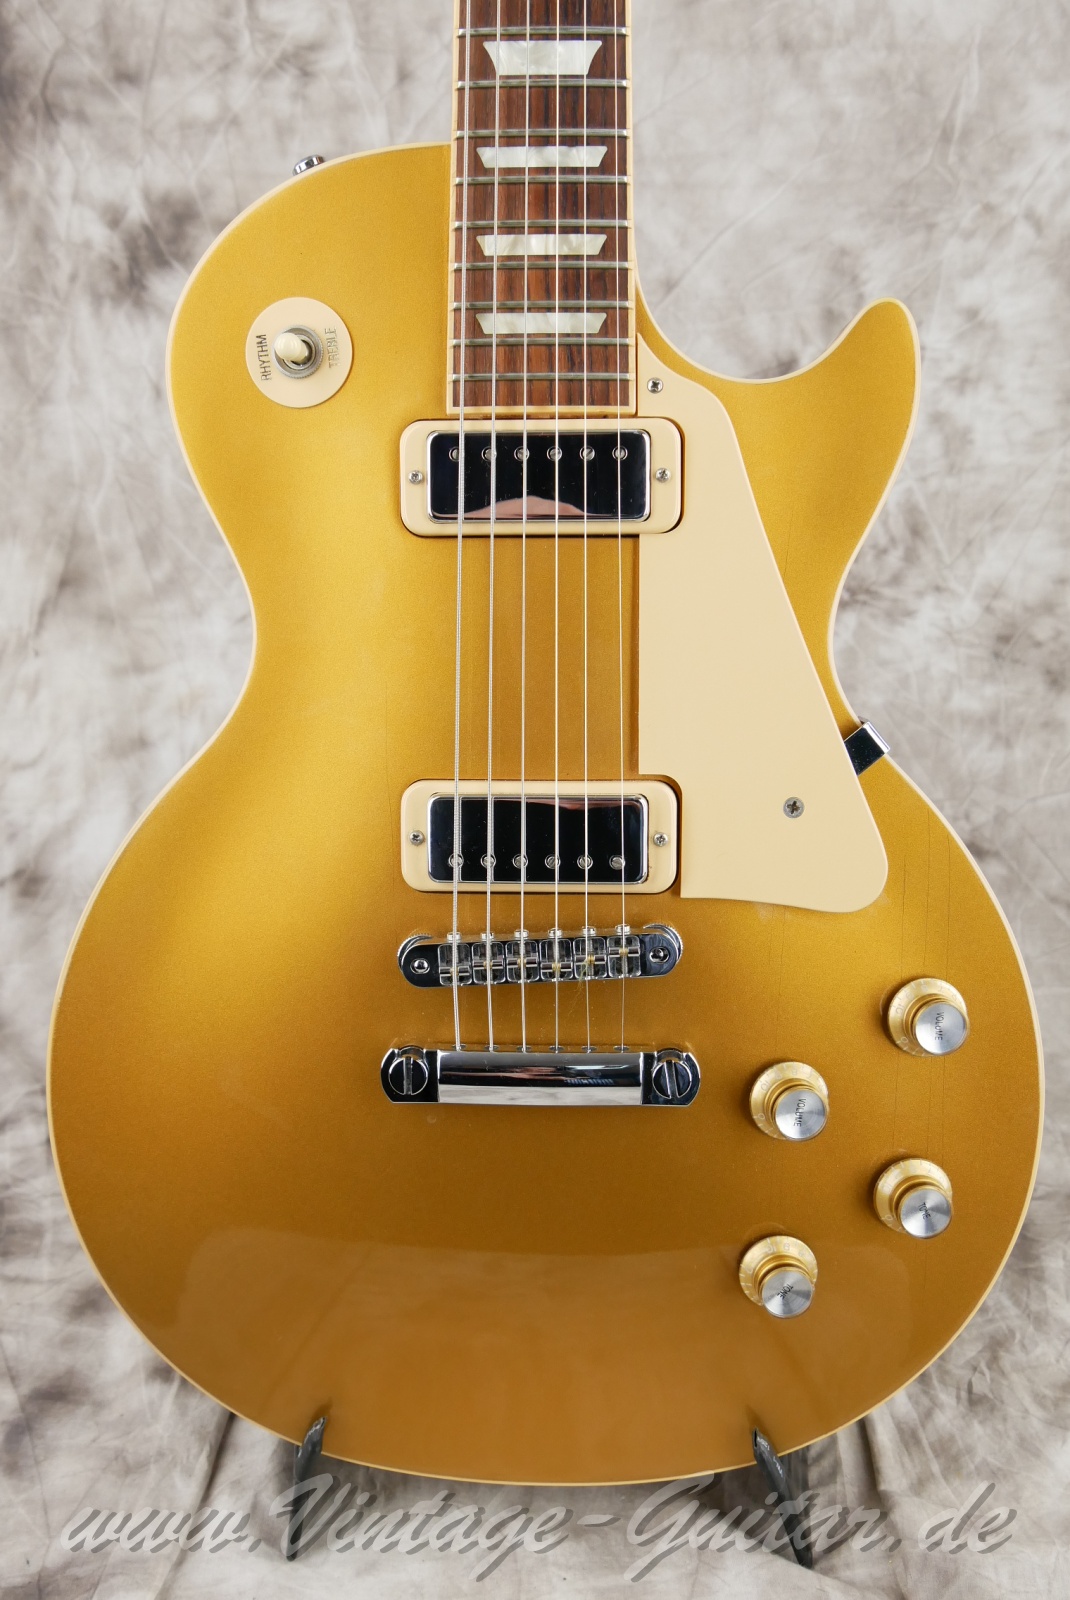 Gibson_Les_Paul_Deluxe_goldtop_Baujahr_2011_USA-007.jpg